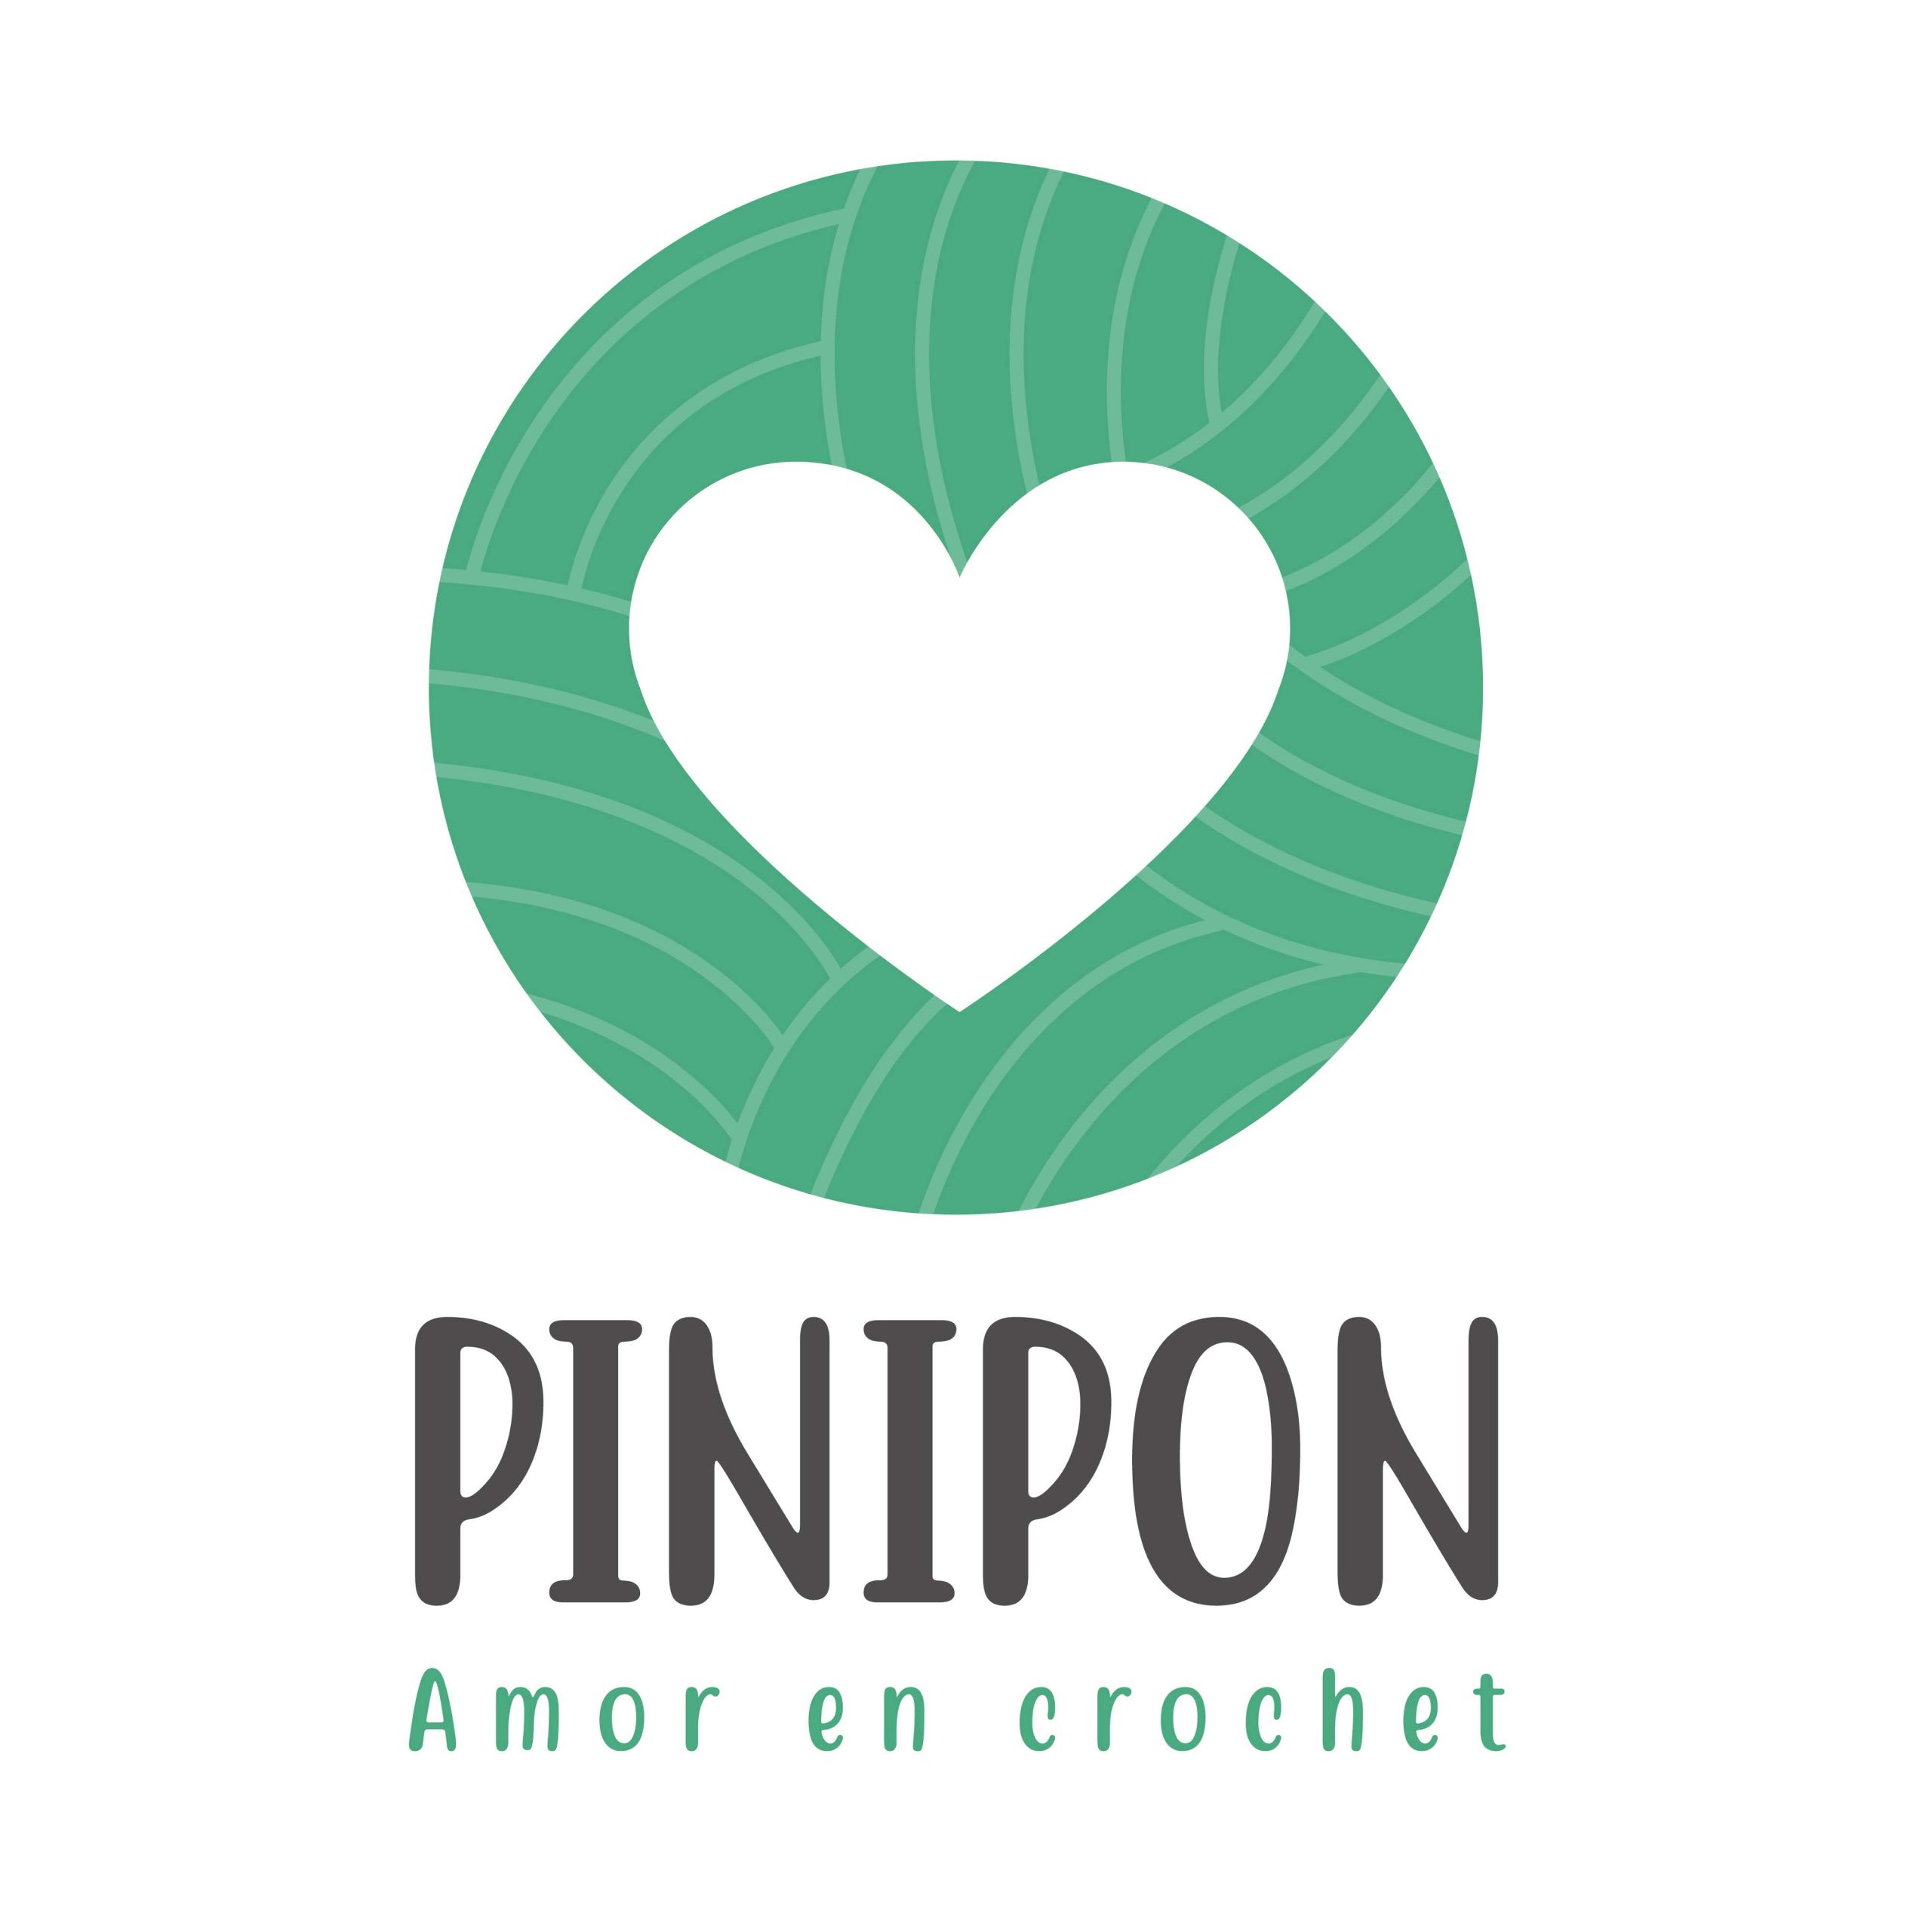 Pinipon (amor en crochet)